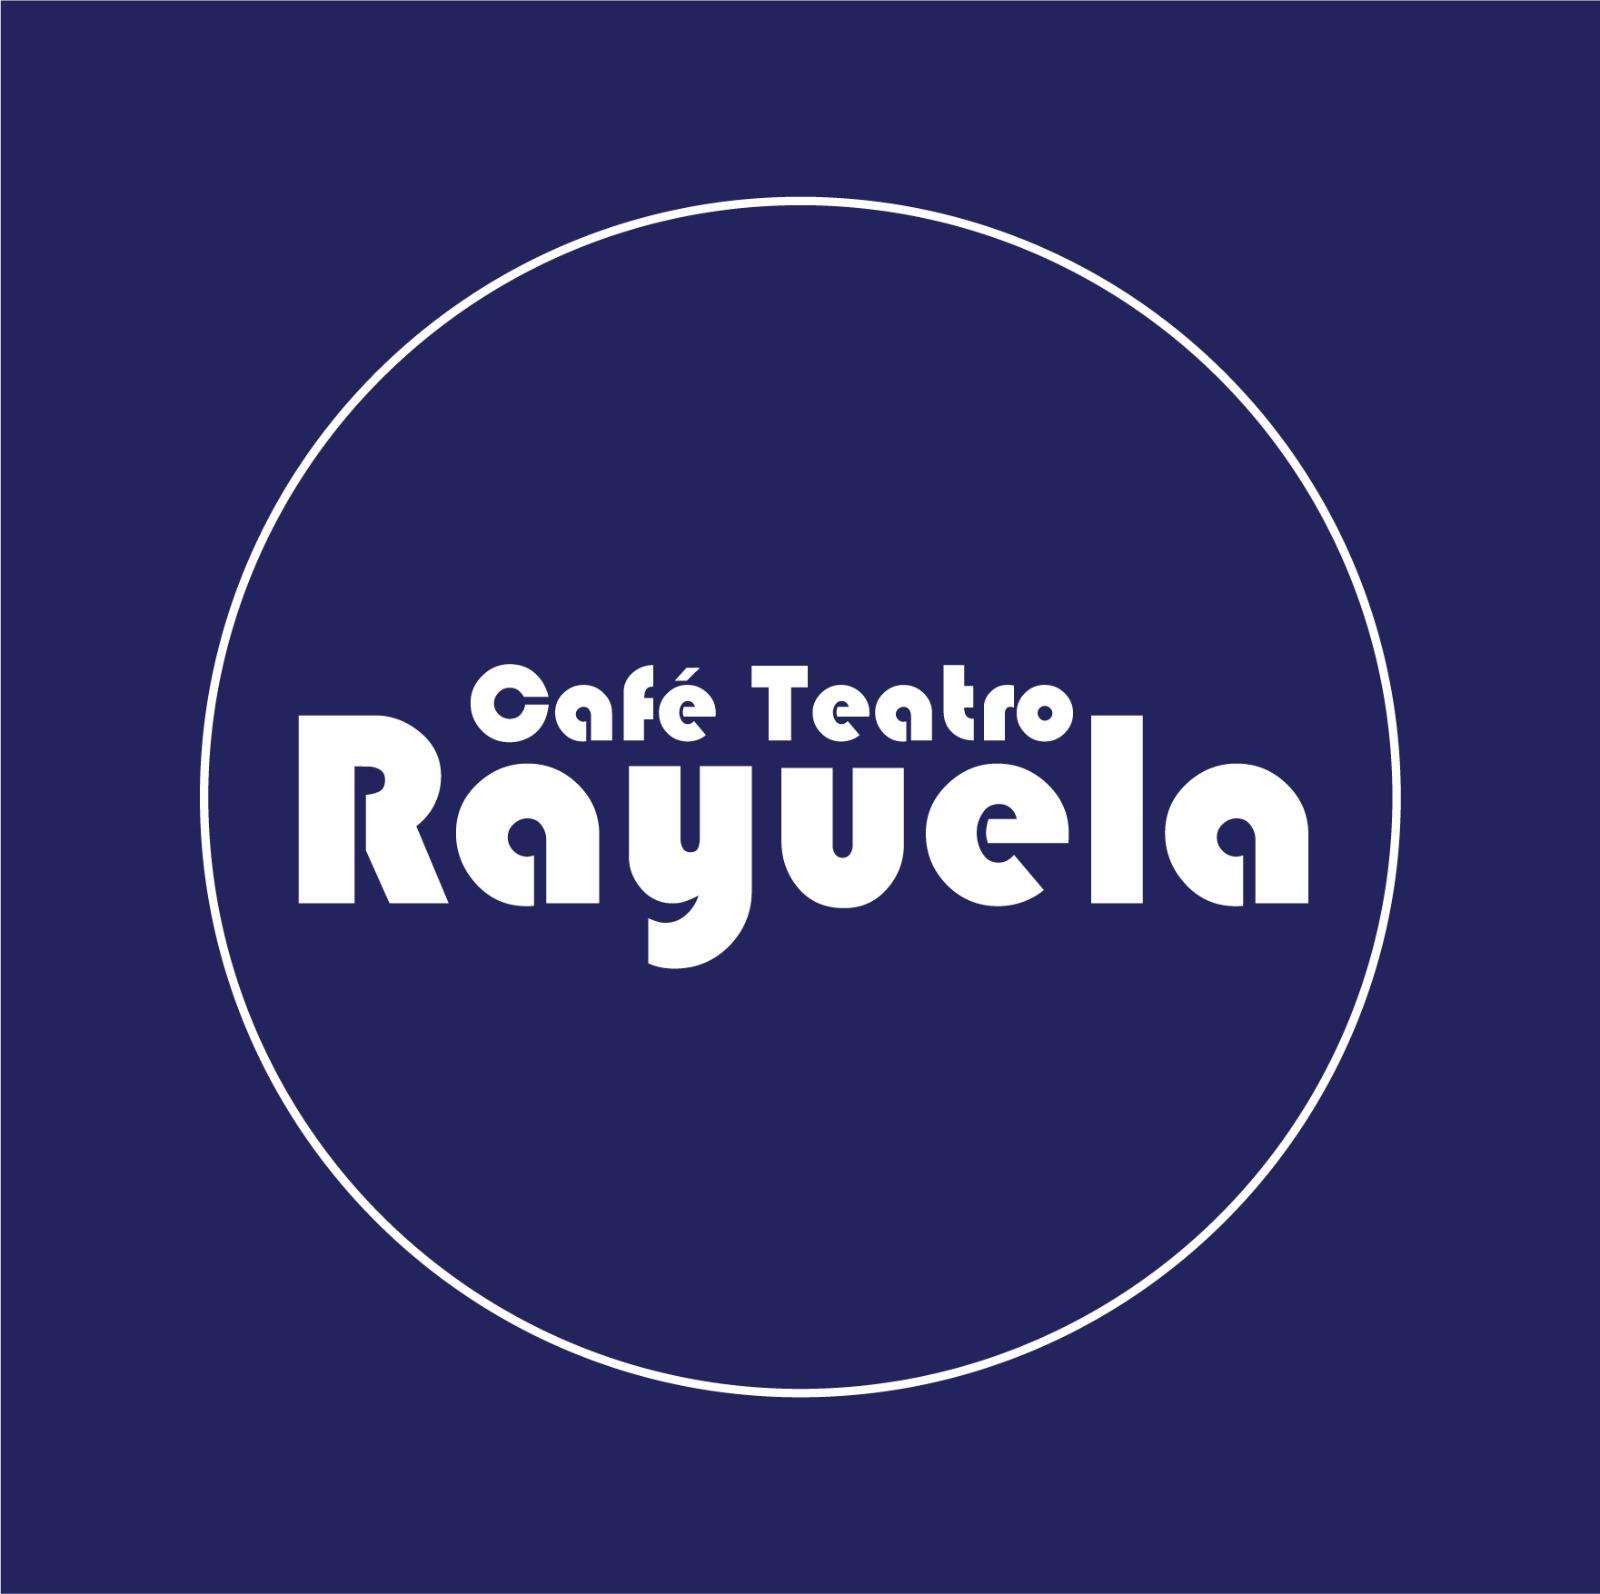 Café Teatro Rayuela